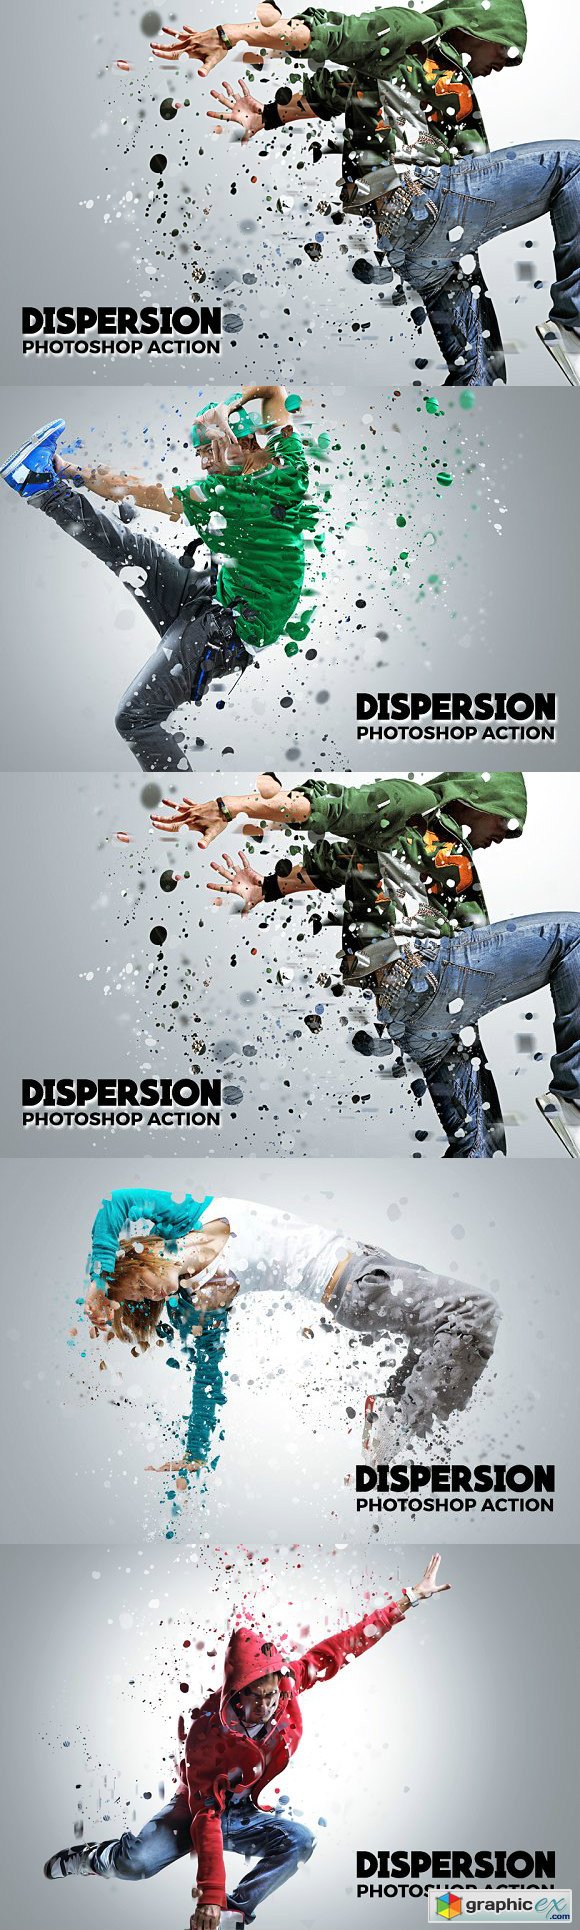 Dispersion Photoshop Action 1591504